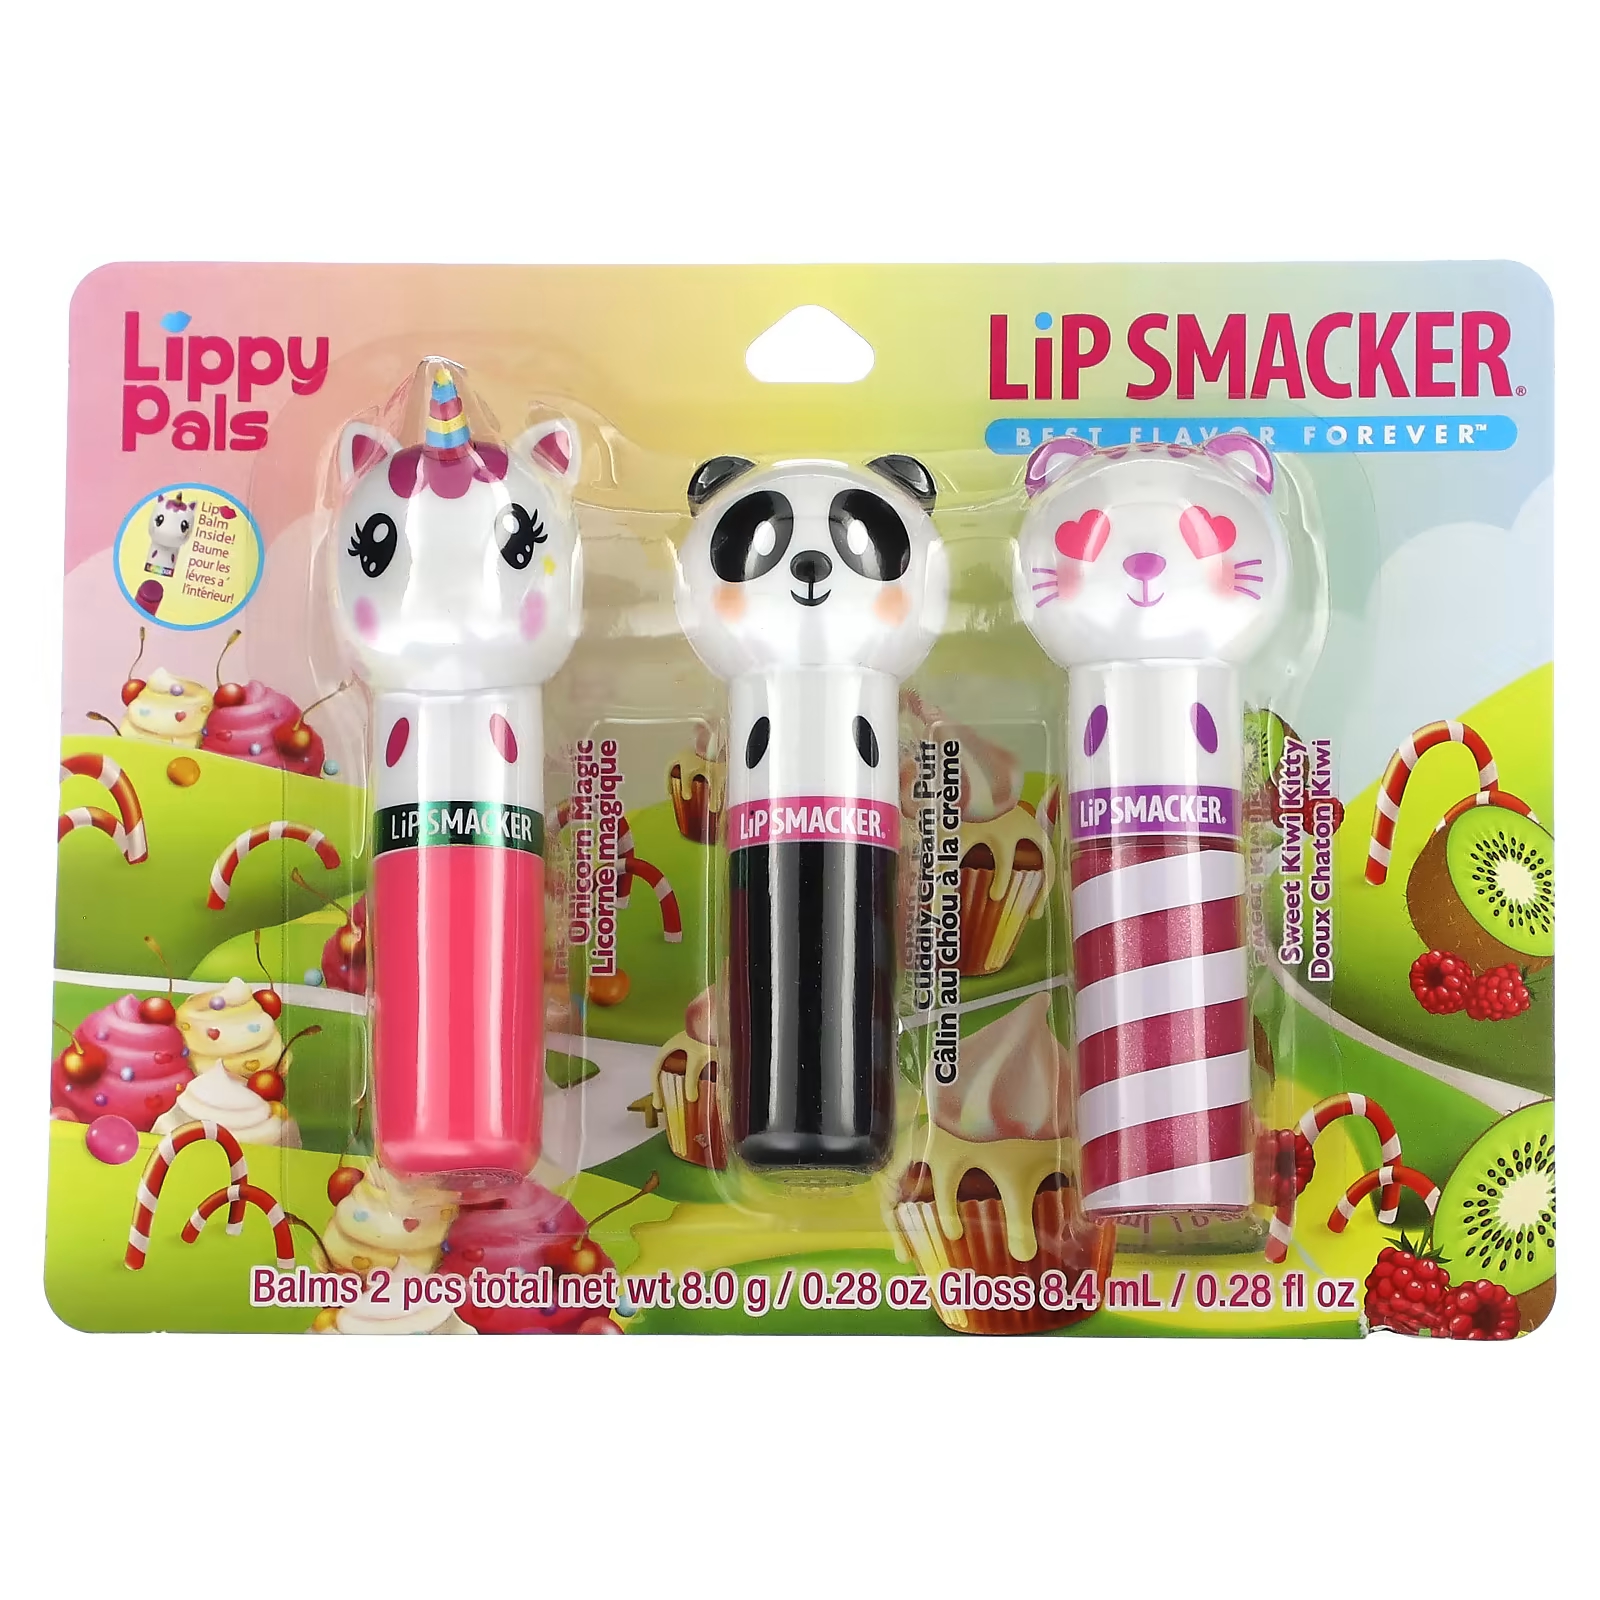 Бальзам для губ Lip Smacker Lippy Pals, 3 шт 16.4 г skinfood эмульсия с персиковым сакэ 4 56 ж унц 135 мл